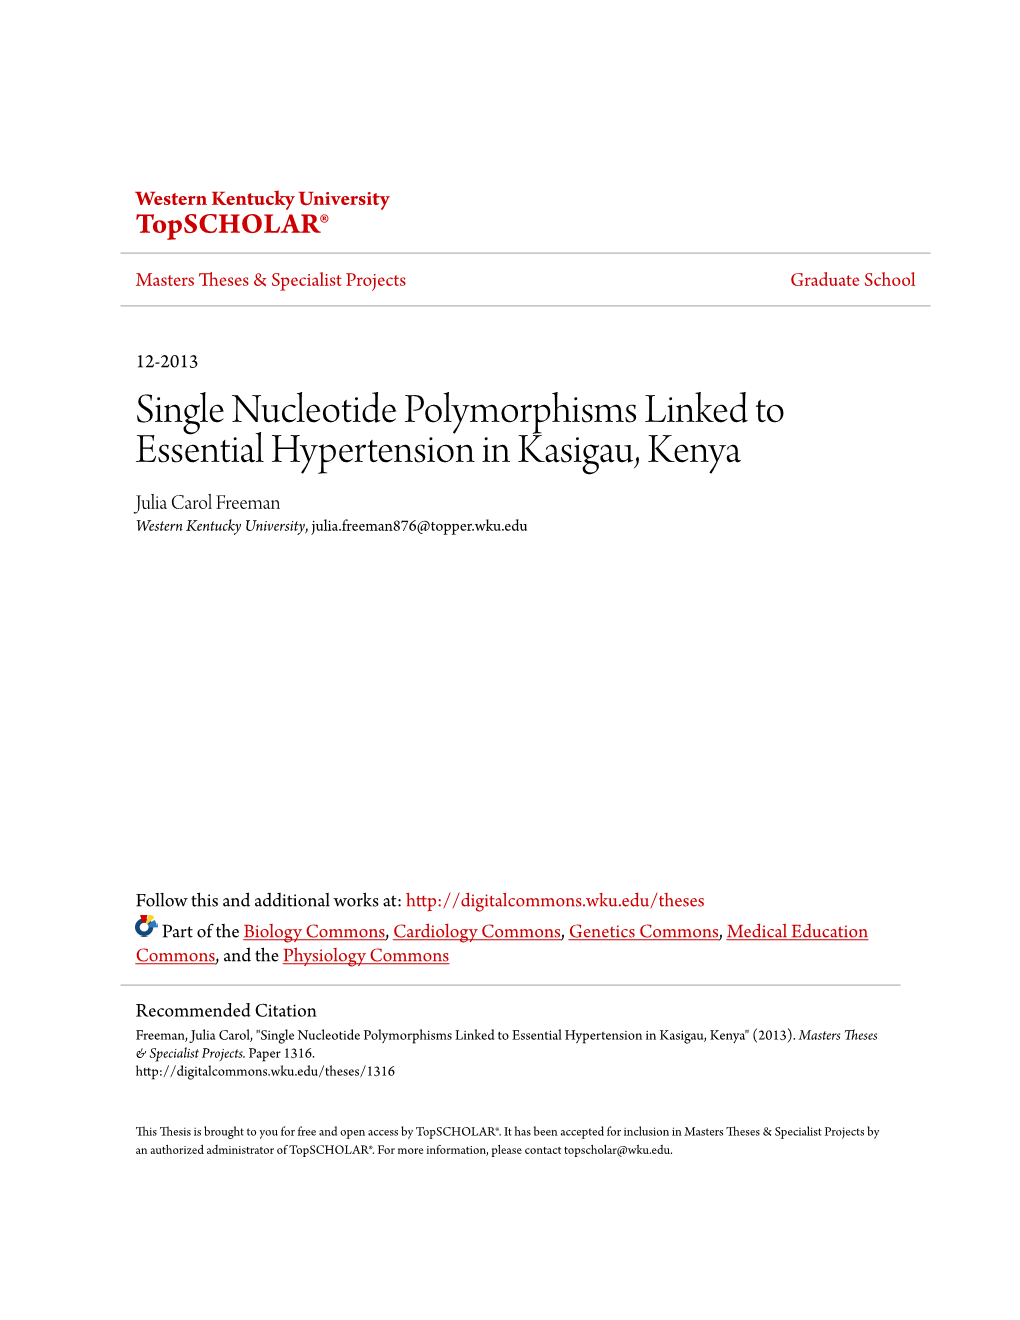 Single Nucleotide Polymorphisms Linked to Essential Hypertension in Kasigau, Kenya Julia Carol Freeman Western Kentucky University, Julia.Freeman876@Topper.Wku.Edu